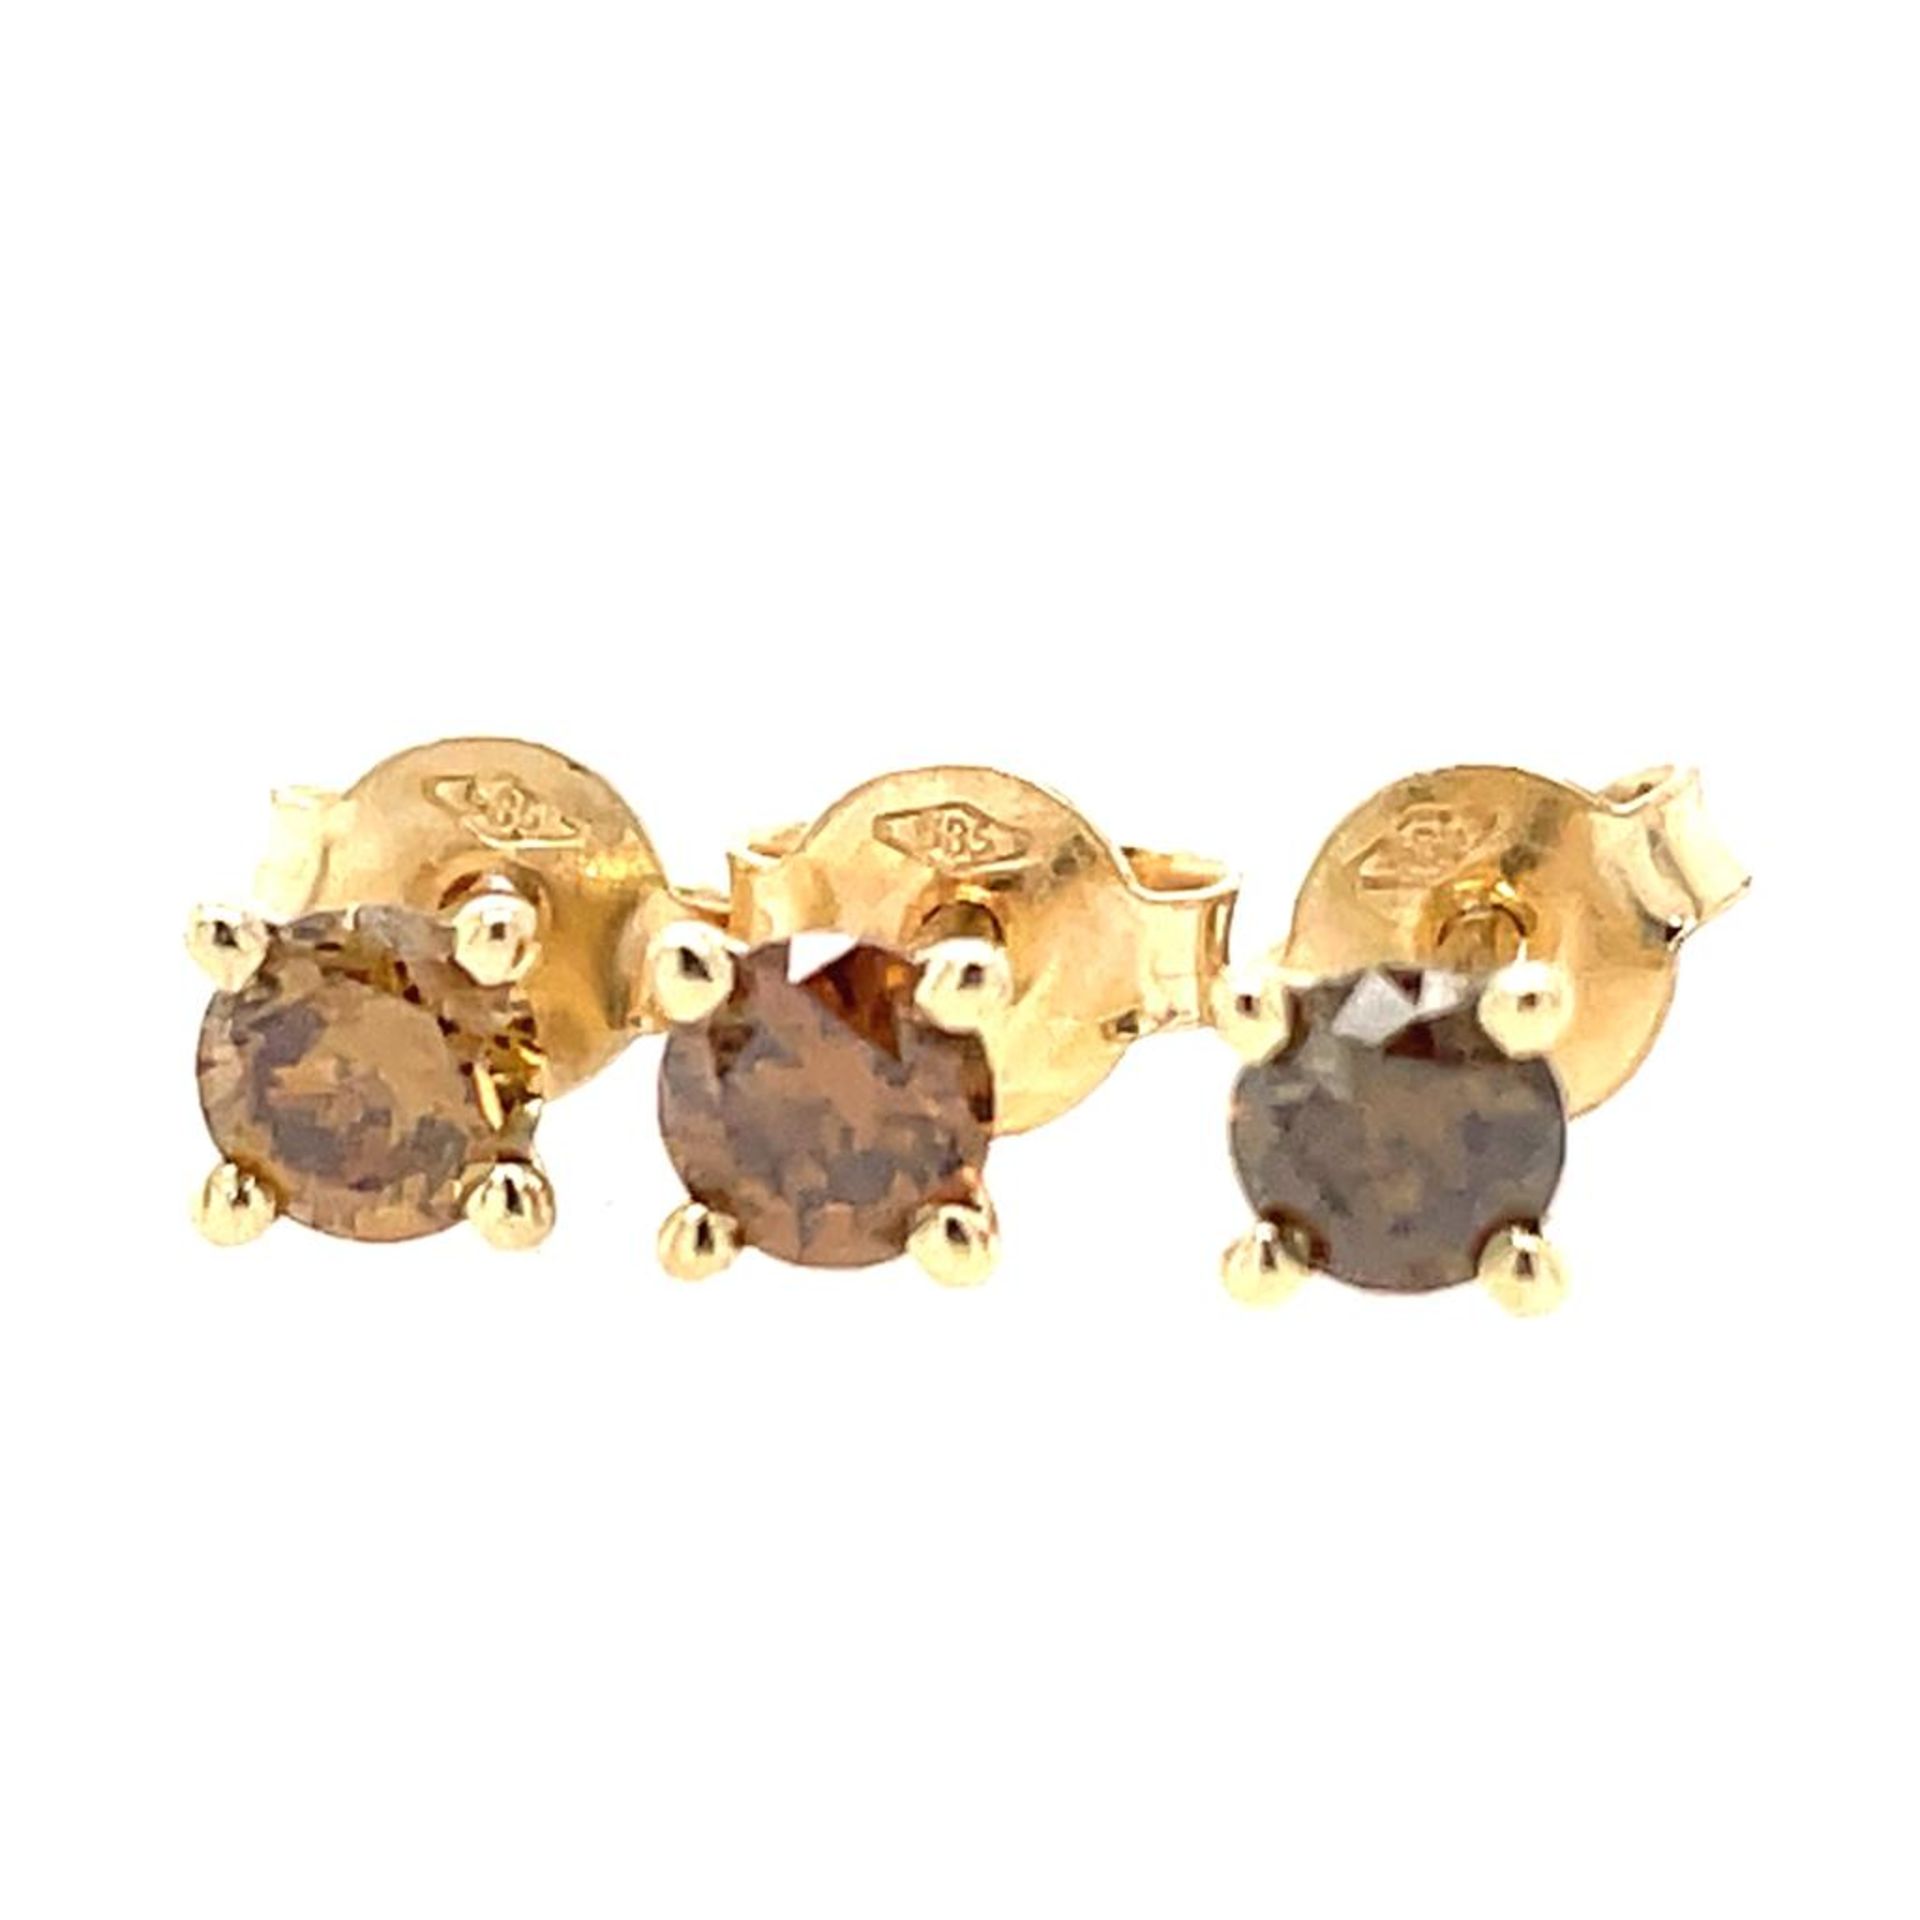 14K YELLOW GOLD 1.17G DIAMOND EARRINGS 0.60 CT CERTIFICATION NONE - ER20310 - Image 3 of 3